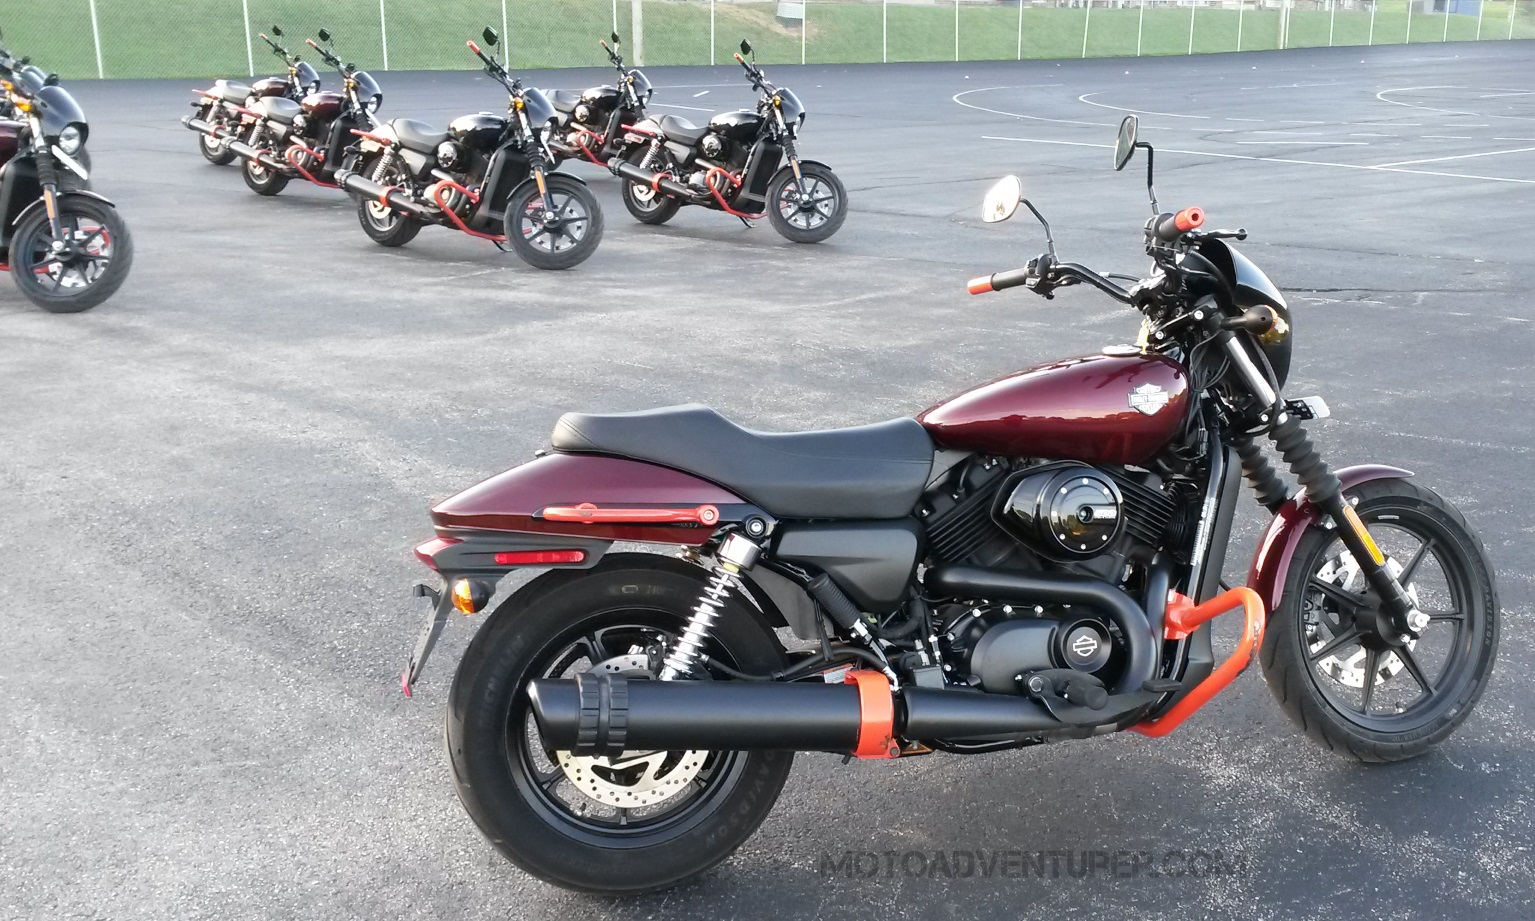  Harley  Davidson  Street  500  First Impressions  Moto 